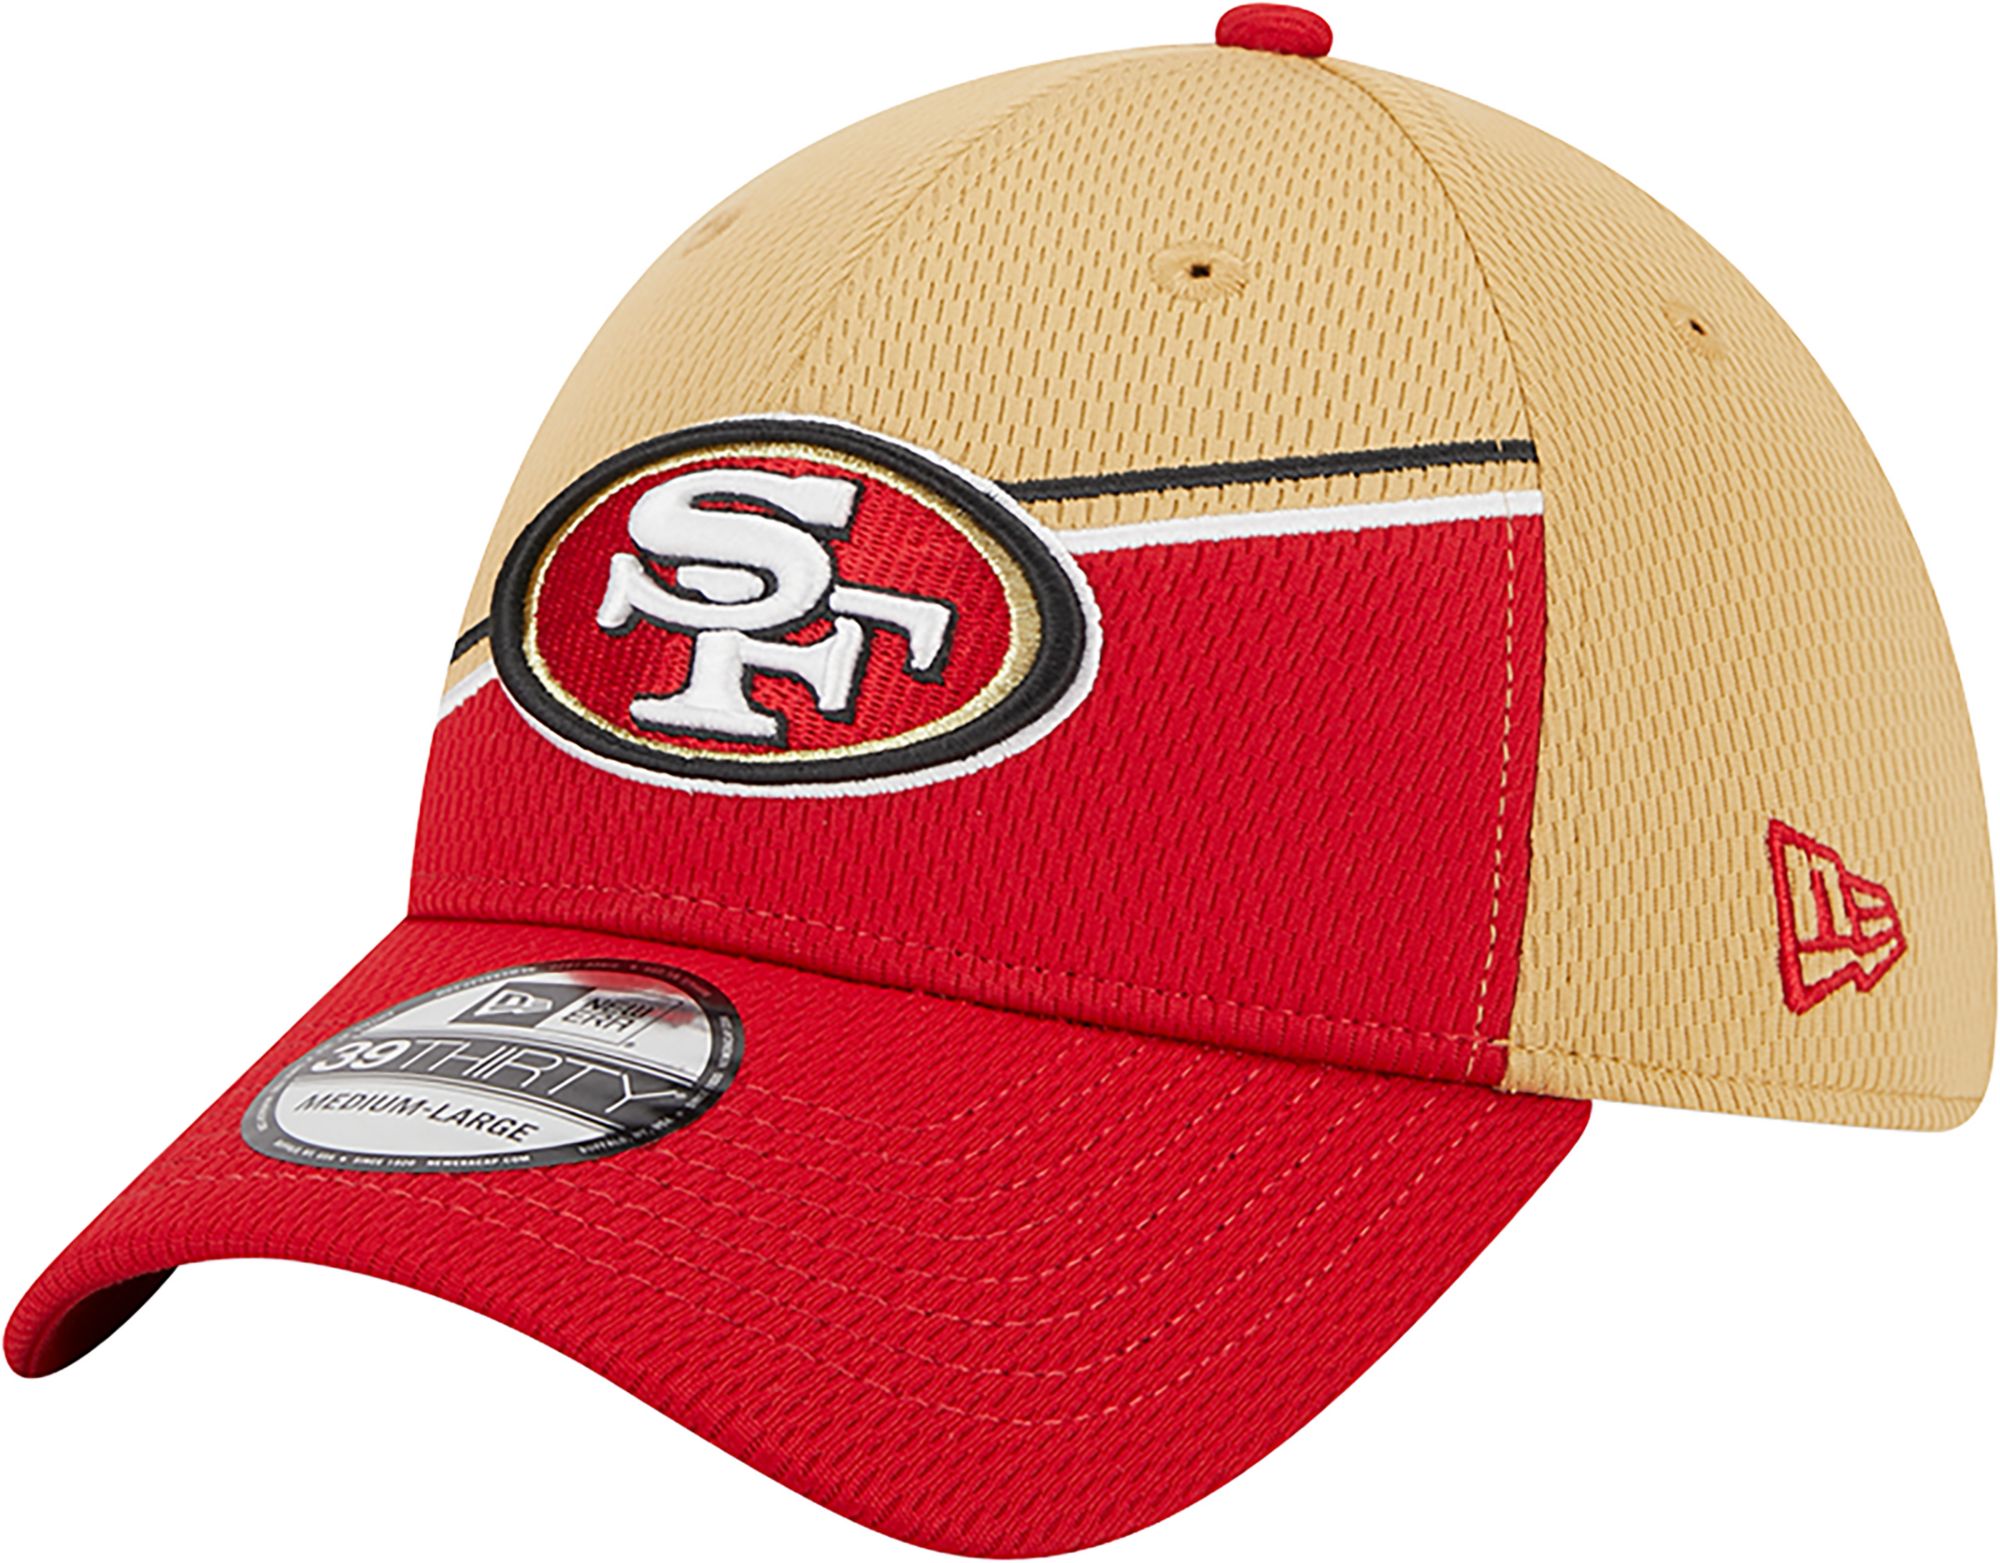 San Francisco 49ers curved-brim cap